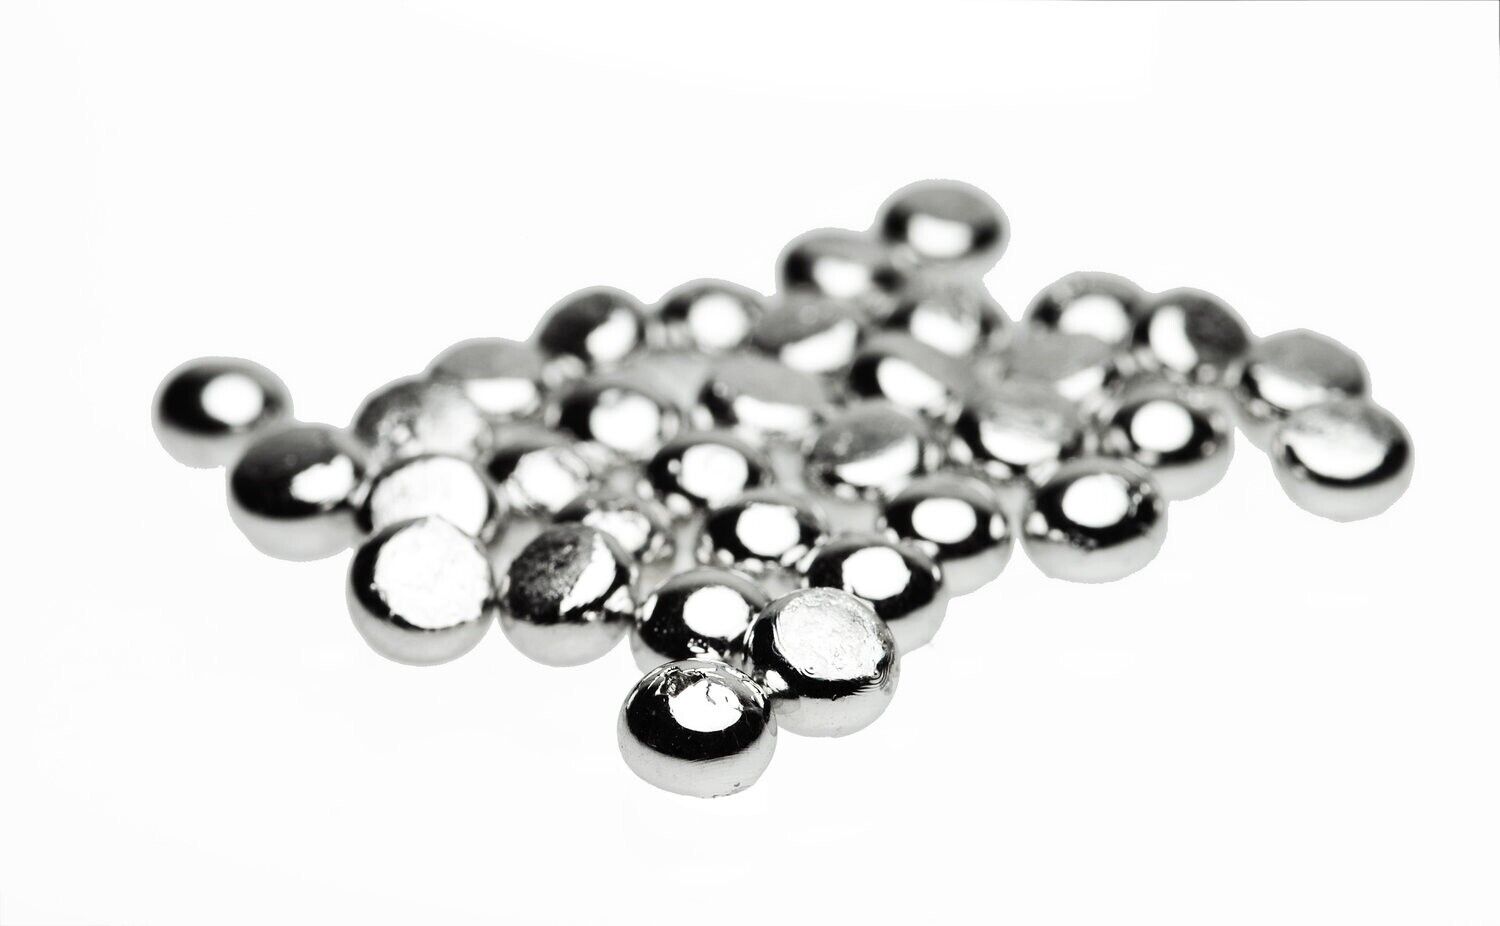 10 gram Ruthenium metal pellet 99.99% Purity. USA.